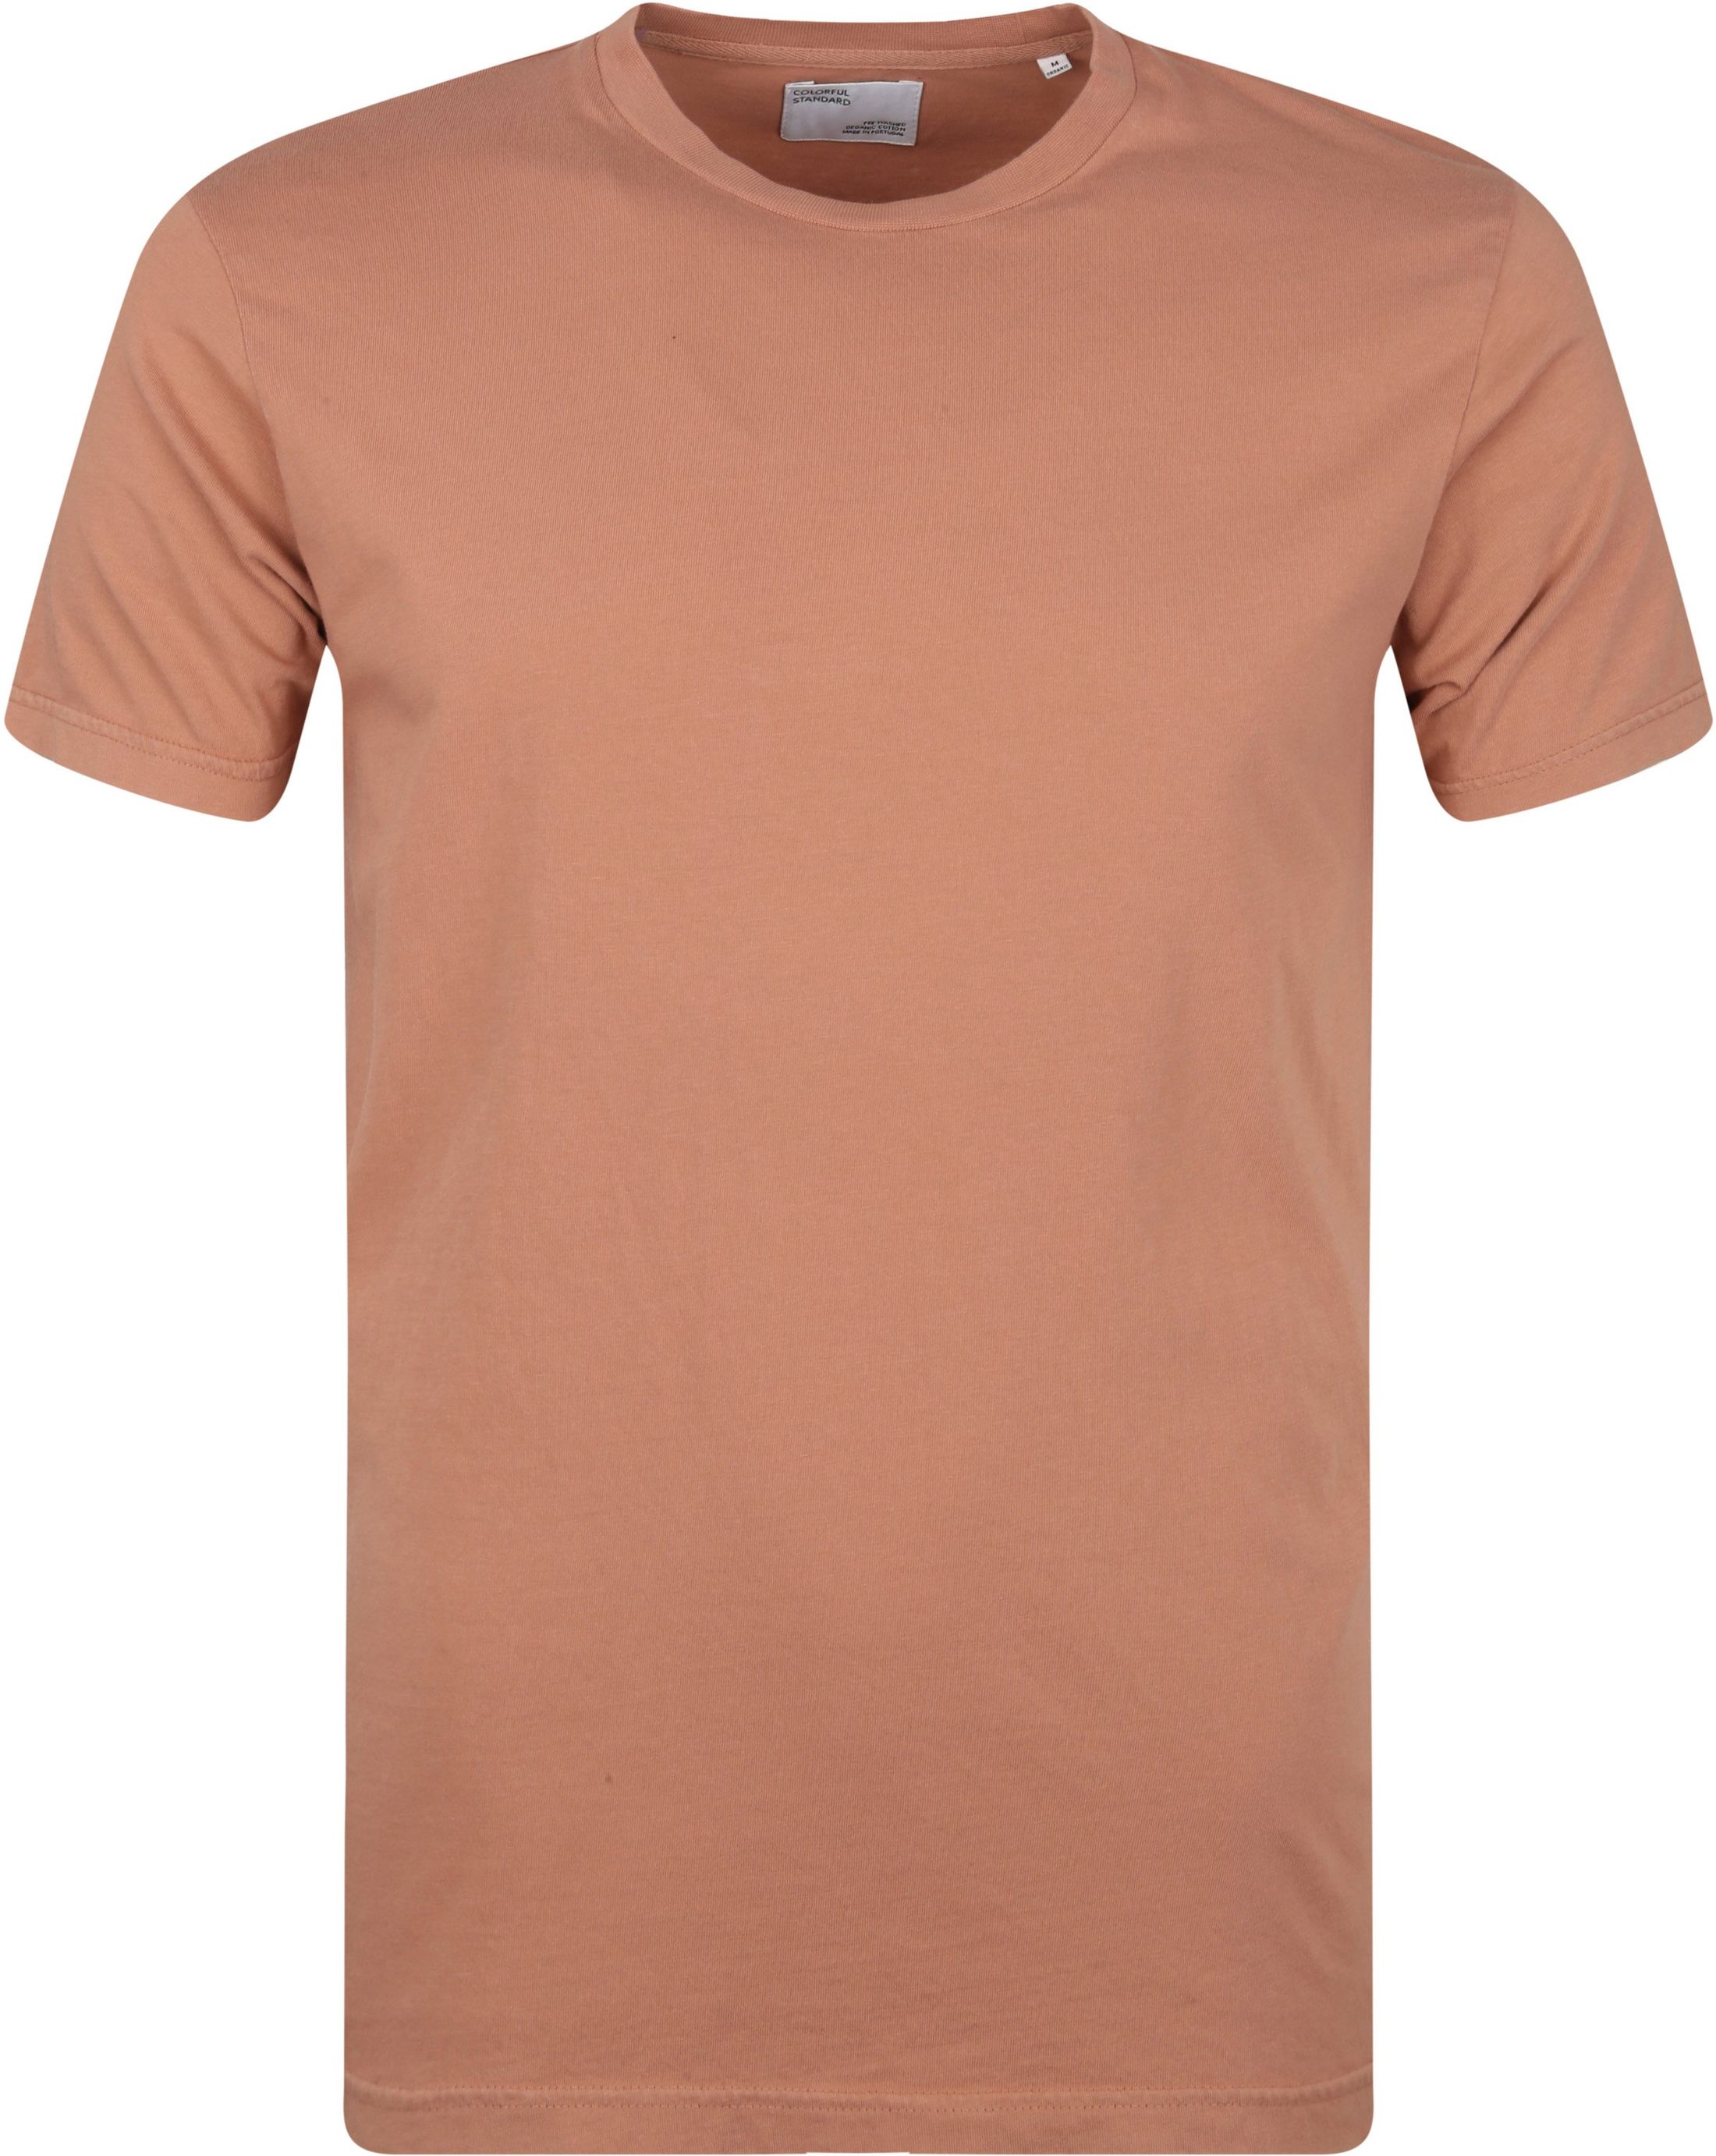 Colorful Standard T-shirt Organic Brown size L